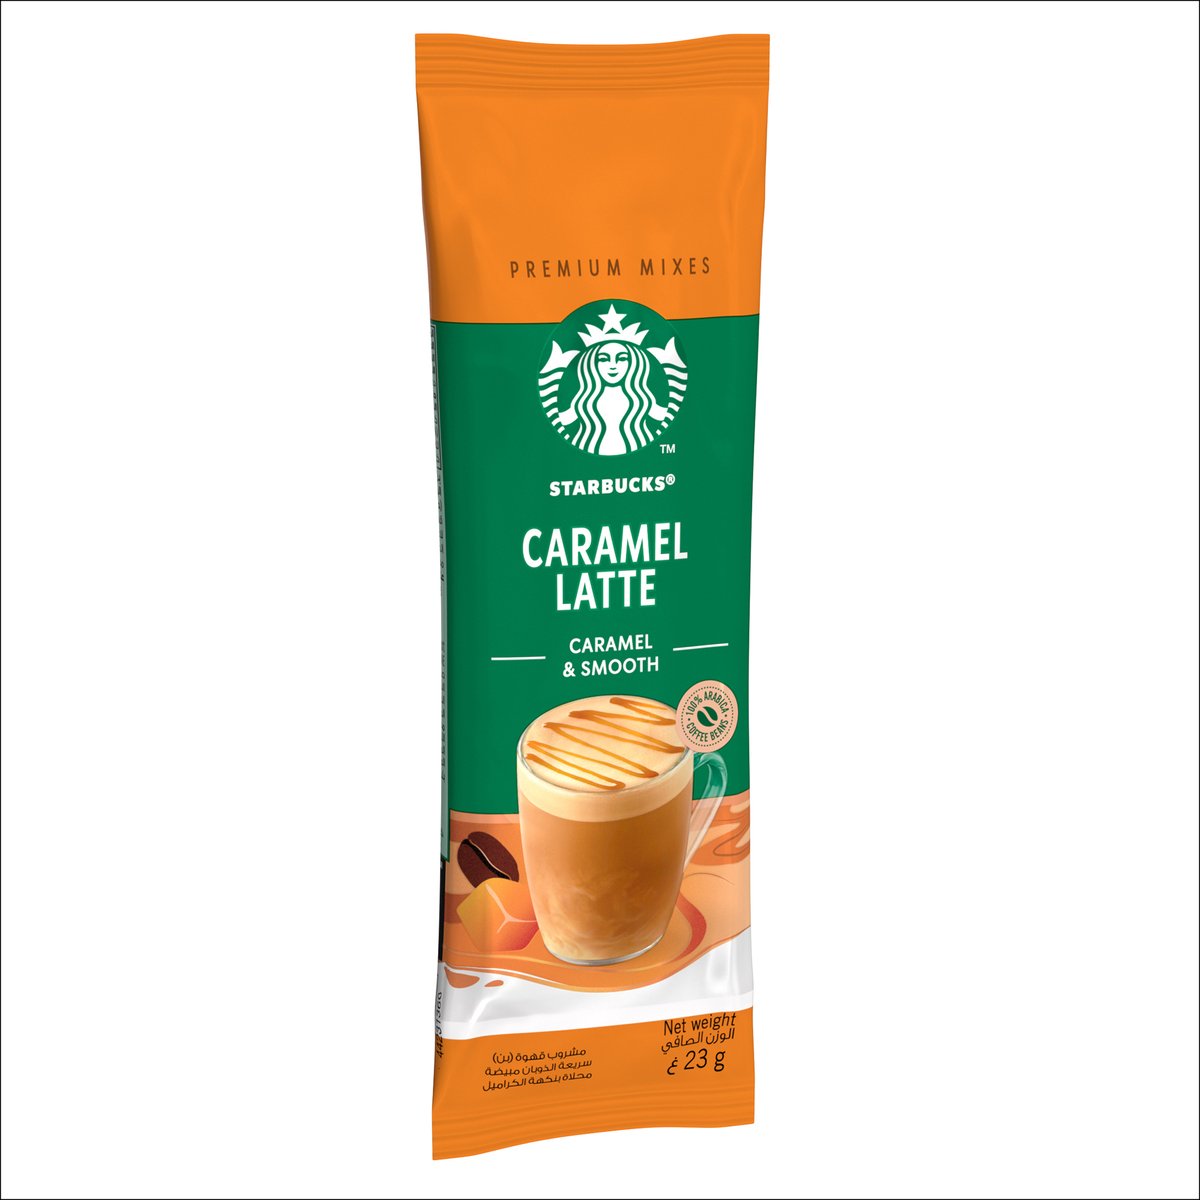 Starbucks Caramel Latte Caramel & Smooth Premium Instant Coffee Mix 23 g